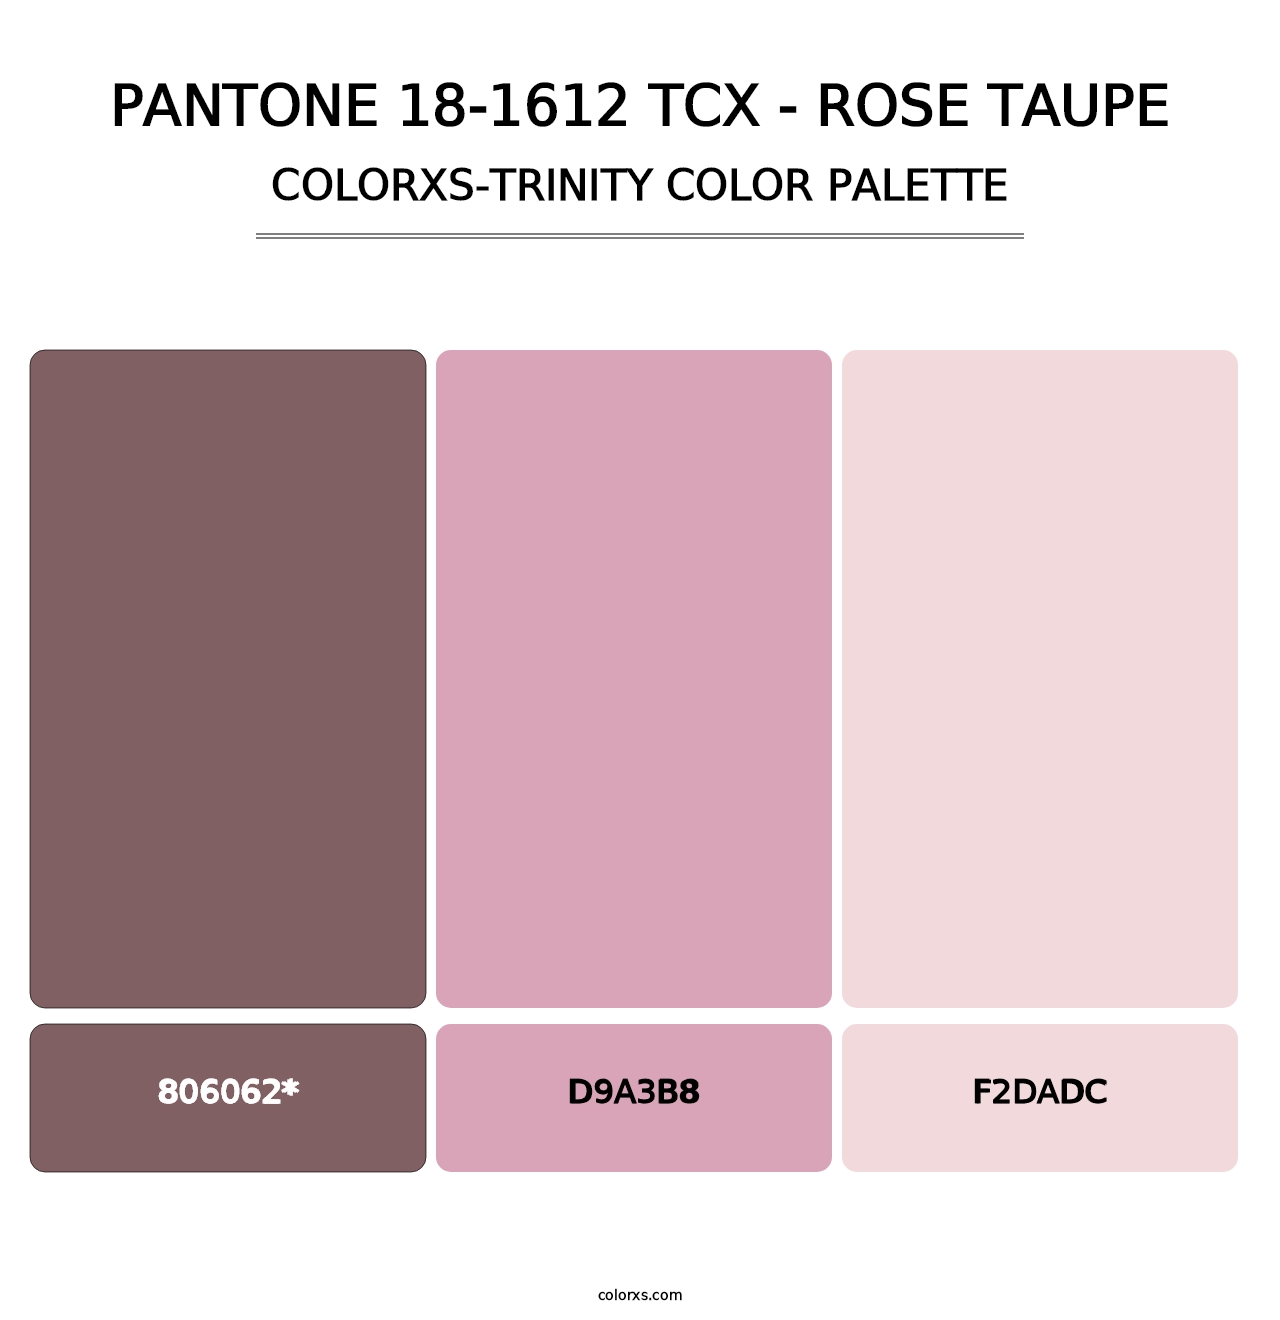 PANTONE 18-1612 TCX - Rose Taupe - Colorxs Trinity Palette